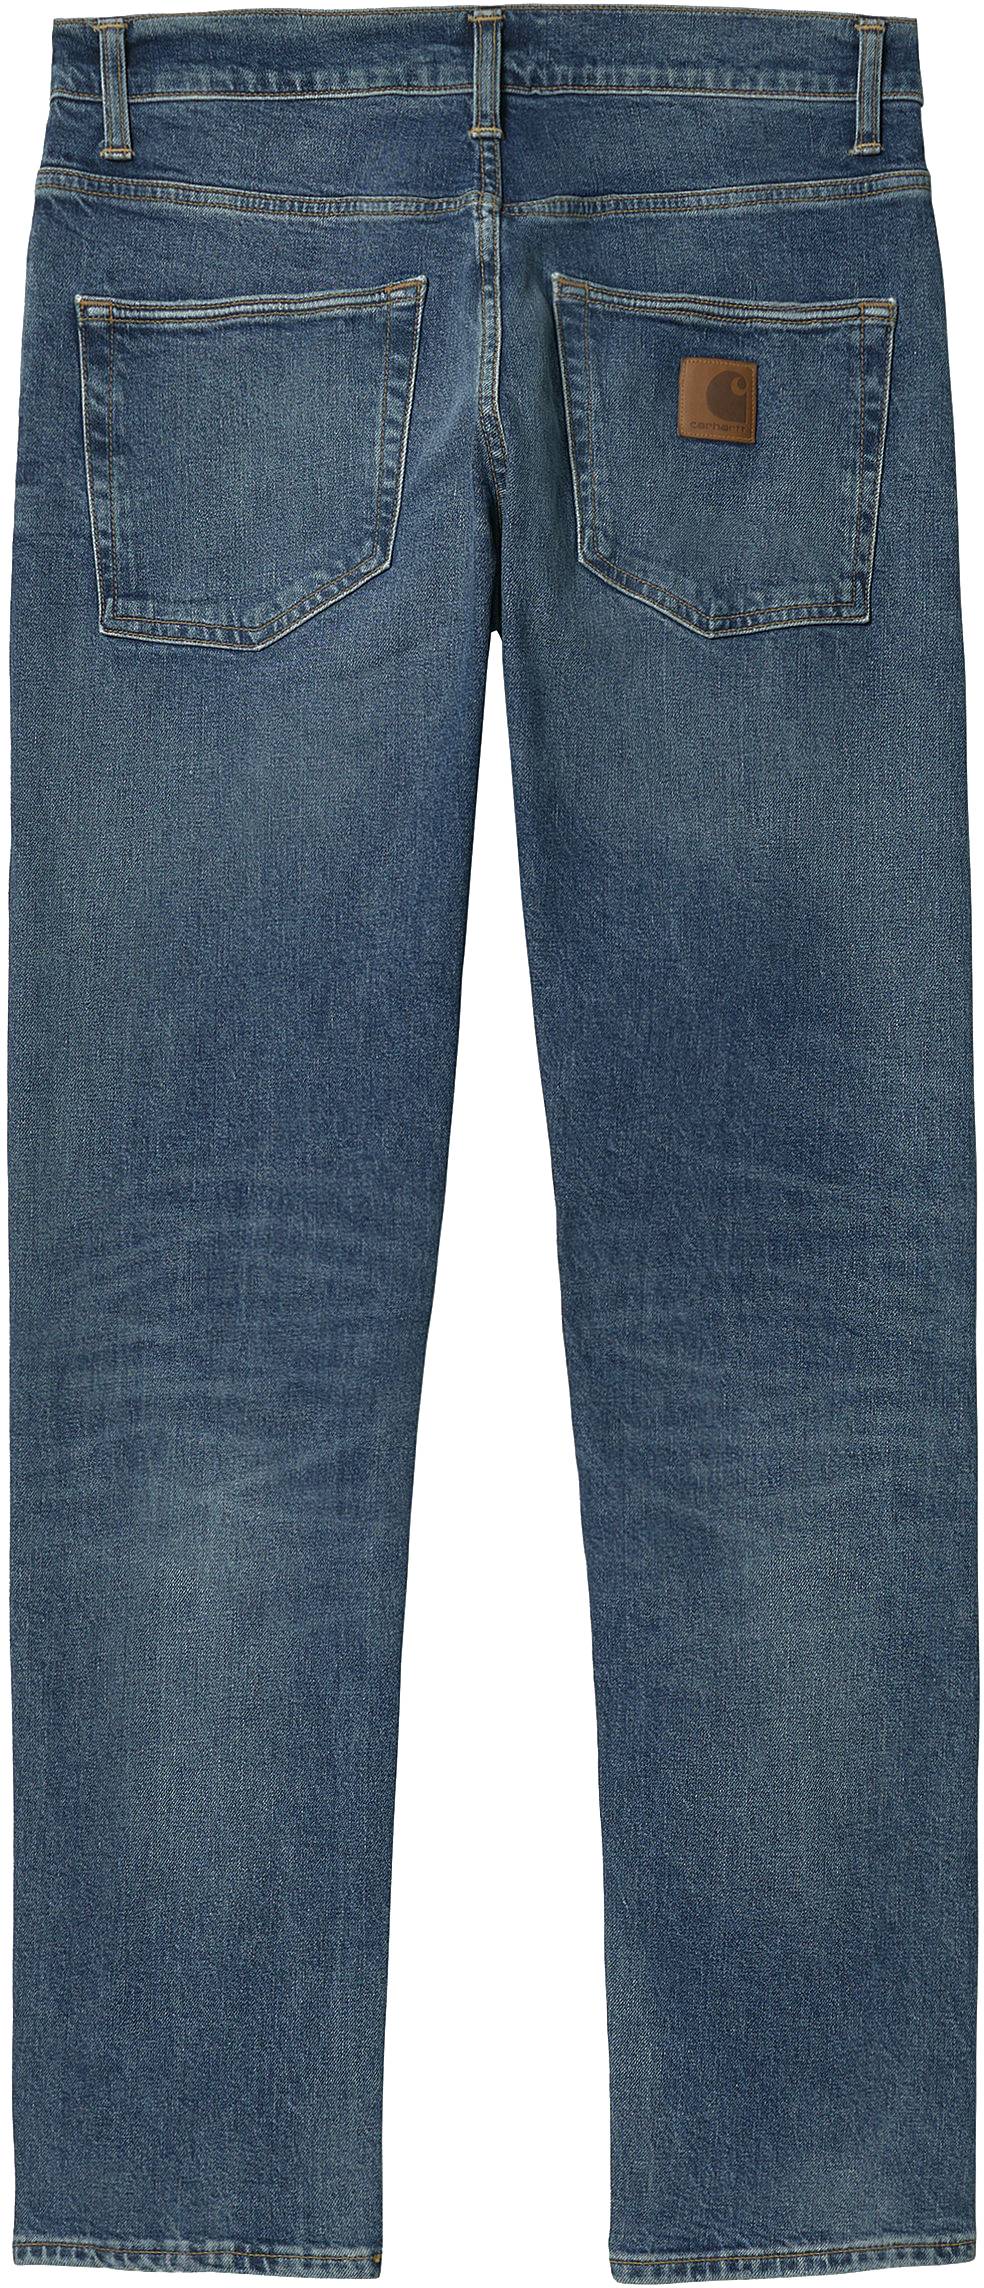  Carhartt Wip Carahartt Wip Jeans Klondike Pant Blue Mid Used Wash Uomo - 1